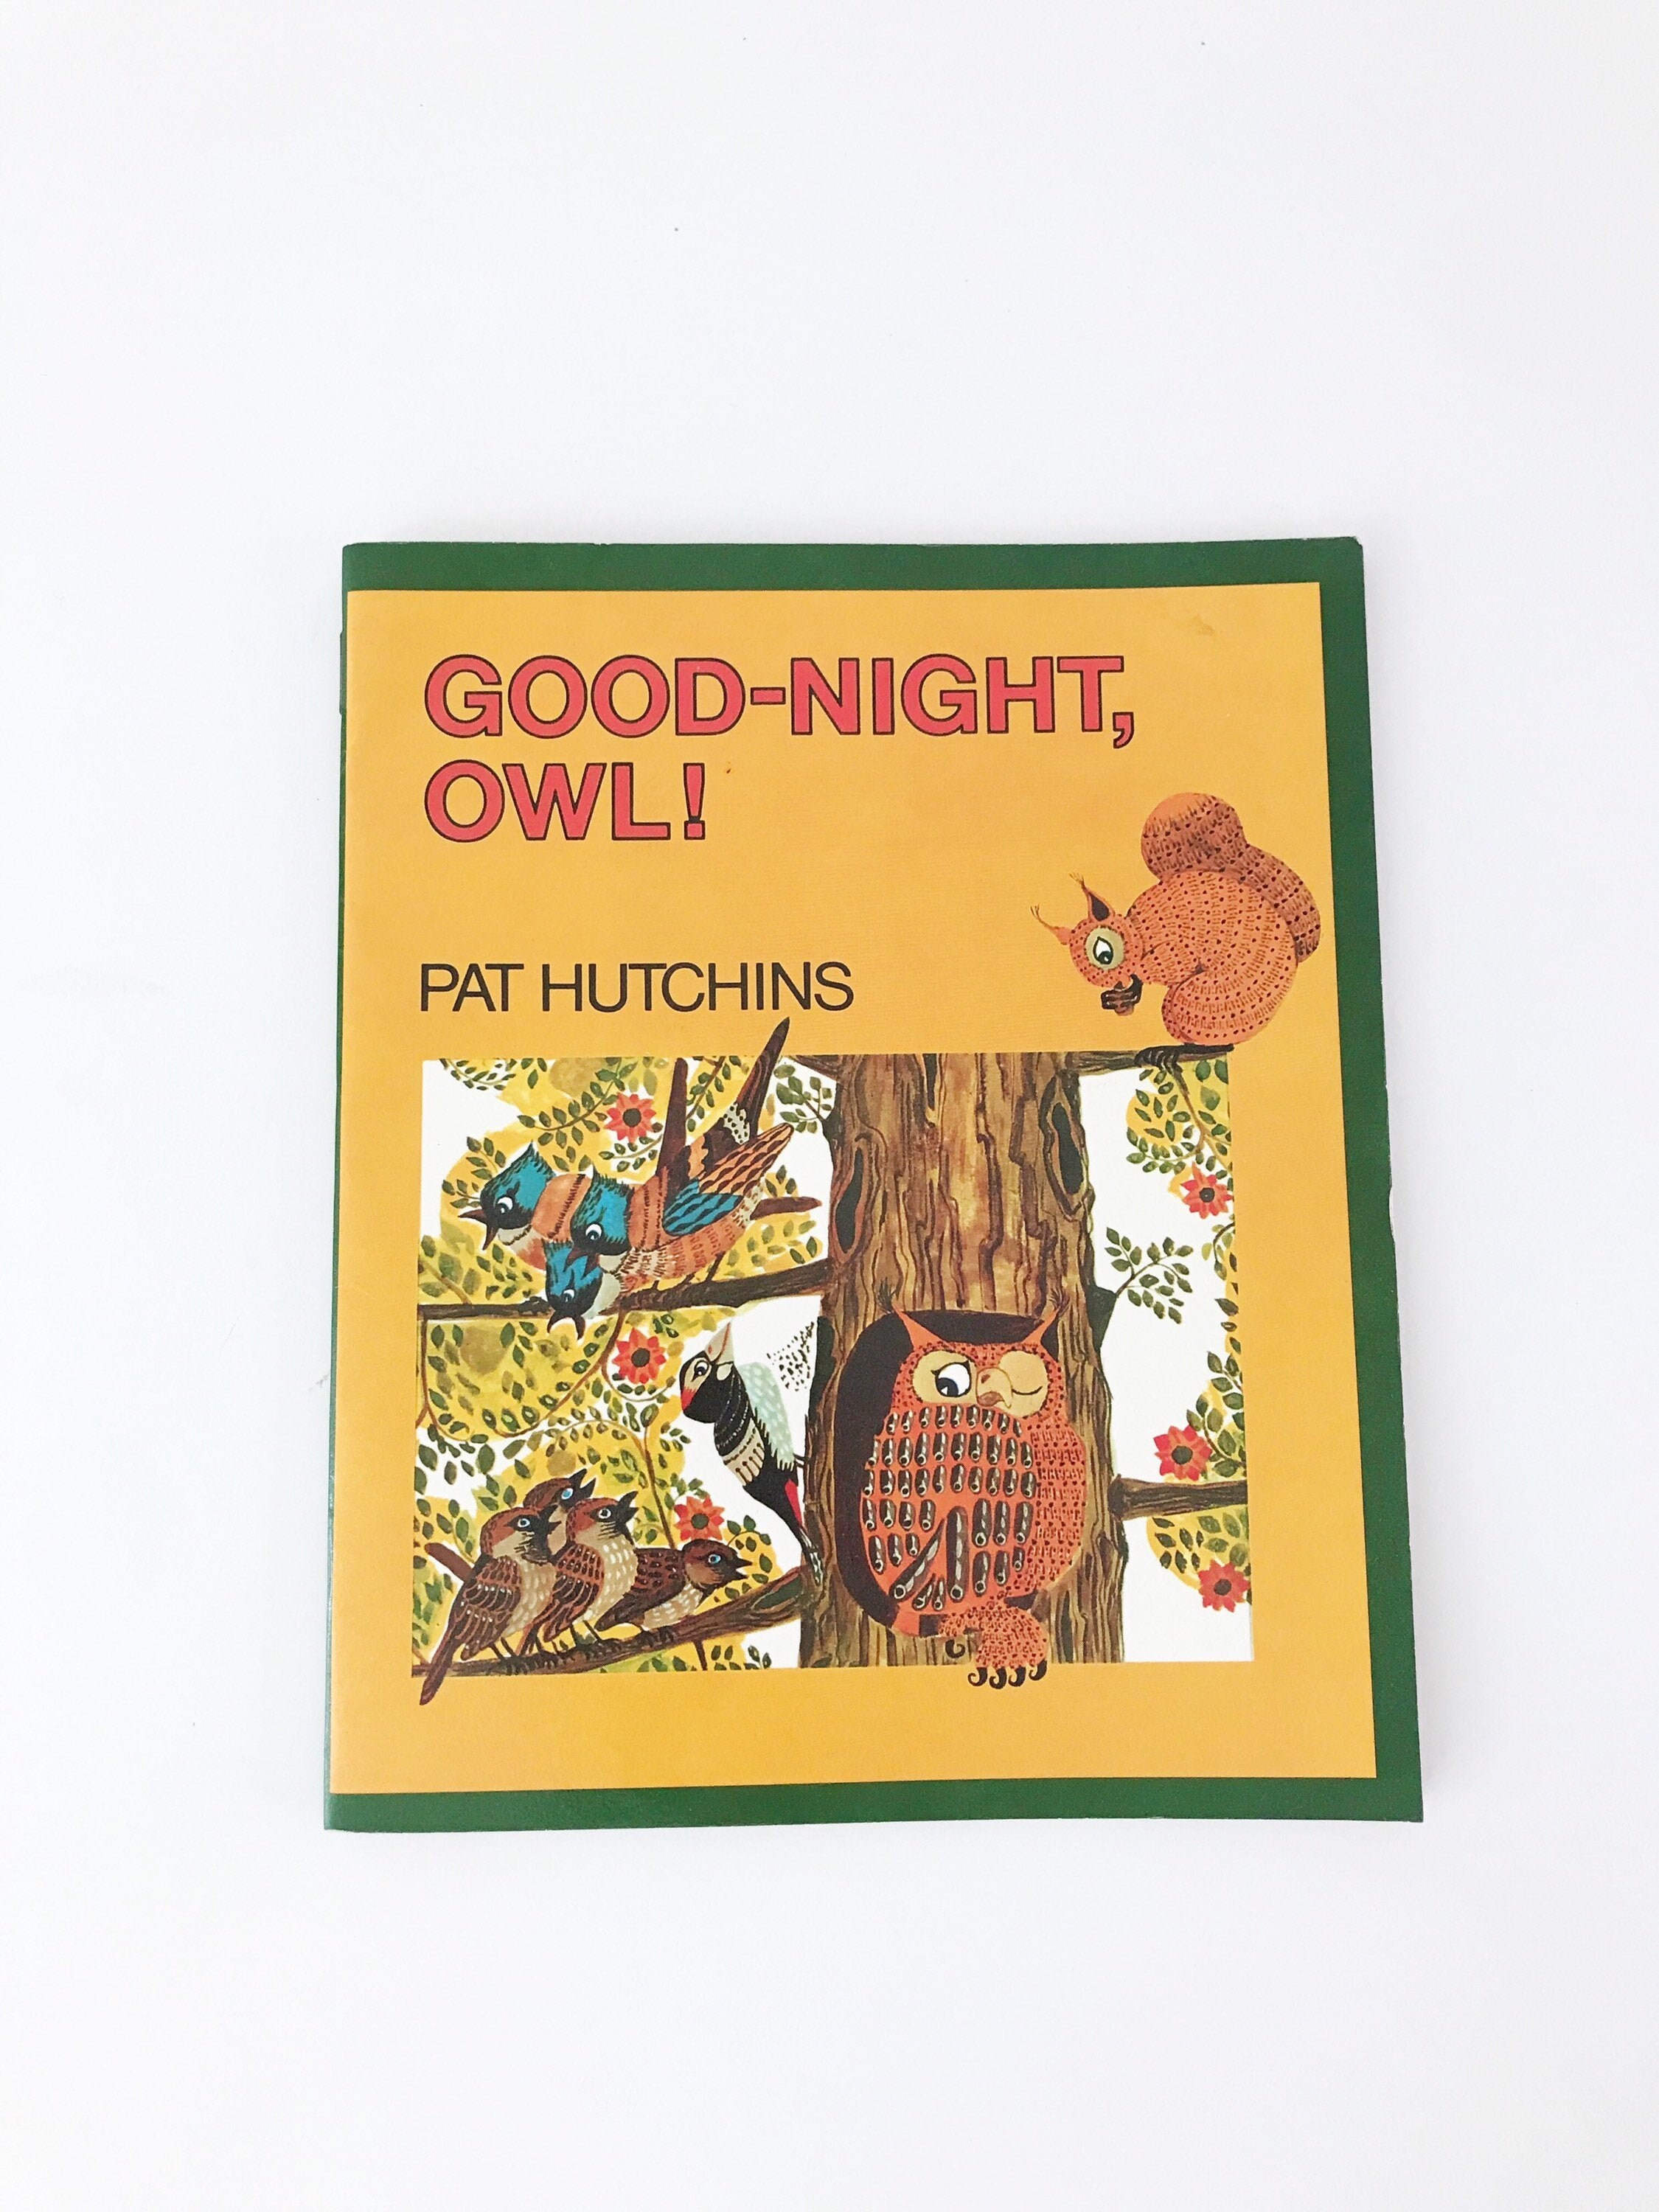 Goodnight Owl Pat Hutchins Paperback 1970s Illustrations | Etsy